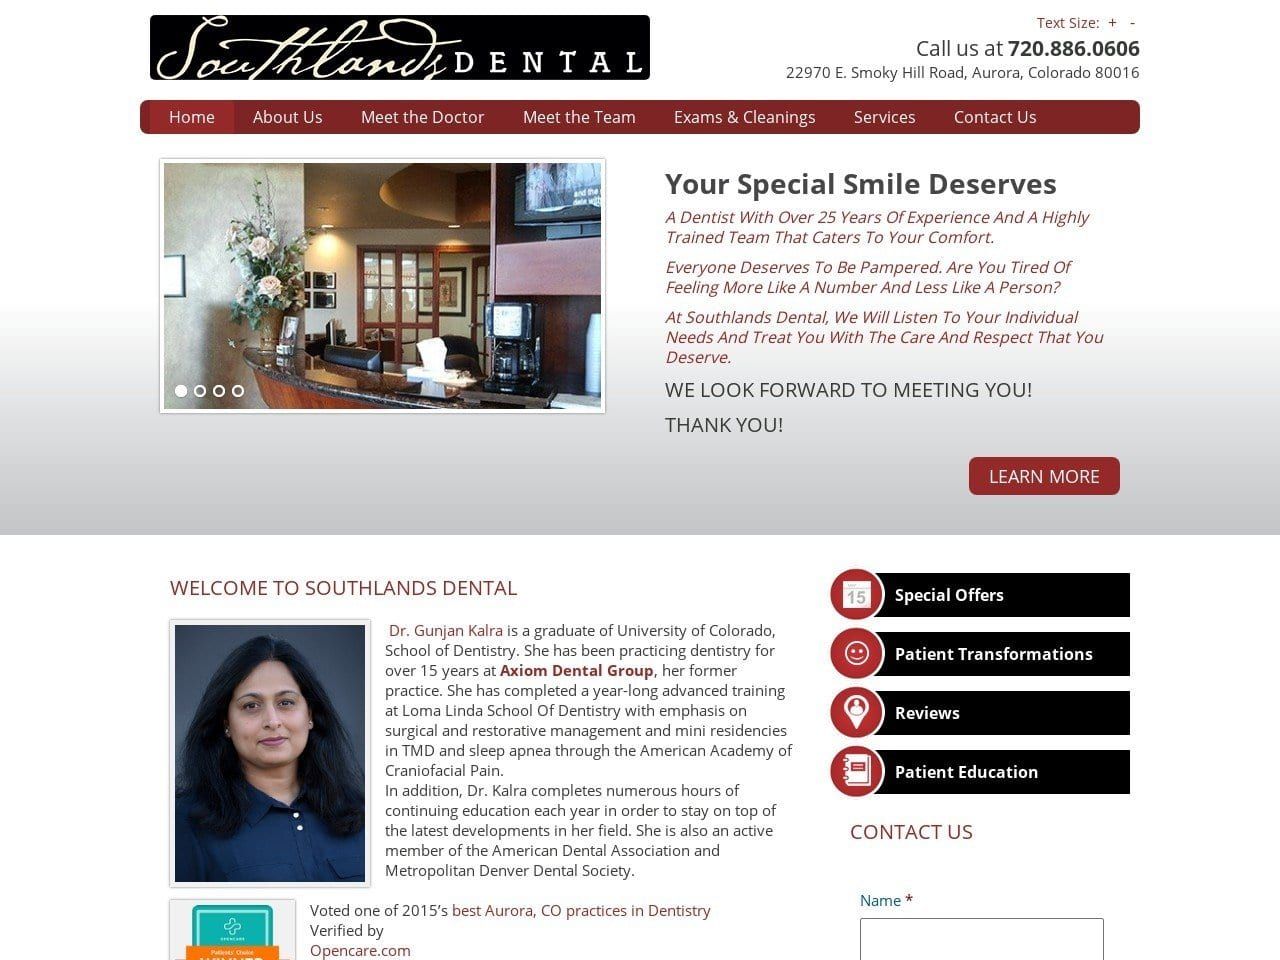 Southlands Dental Website Screenshot from southlandsdental.com